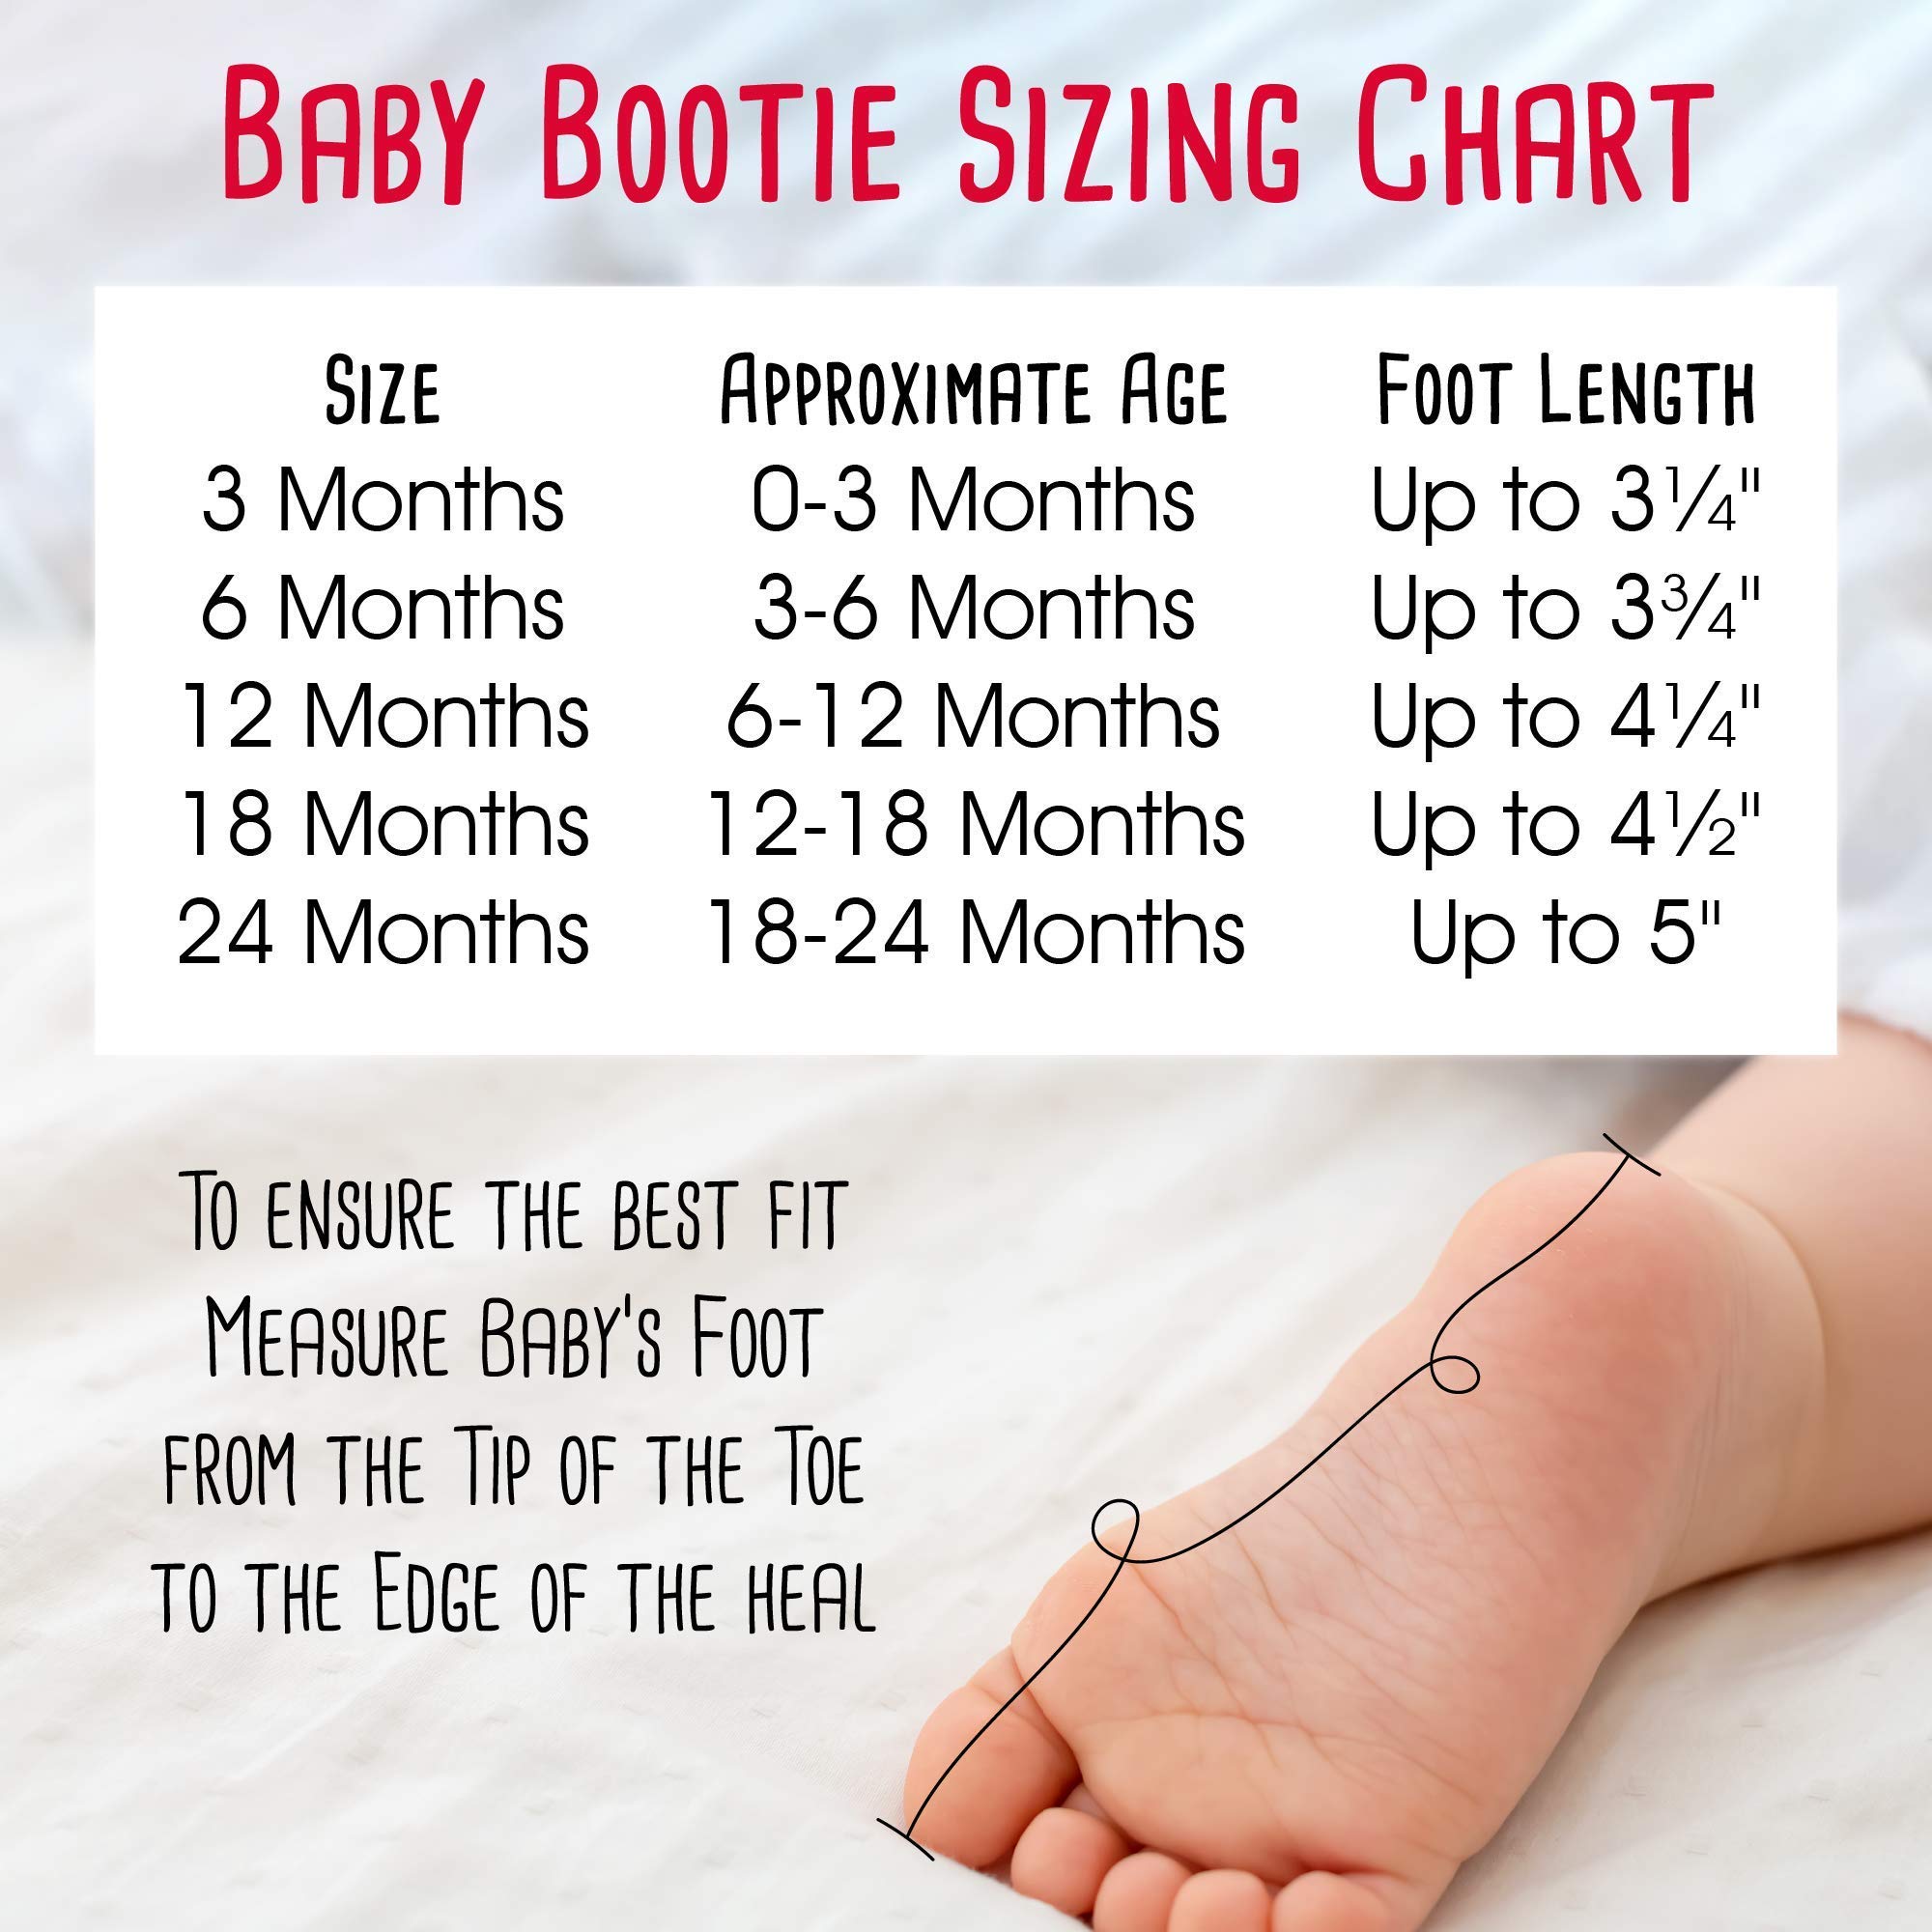 Zutano Cozie Fleece Baby Booties with Grippers, Stay-On Baby Shoes, Bundle, 12M